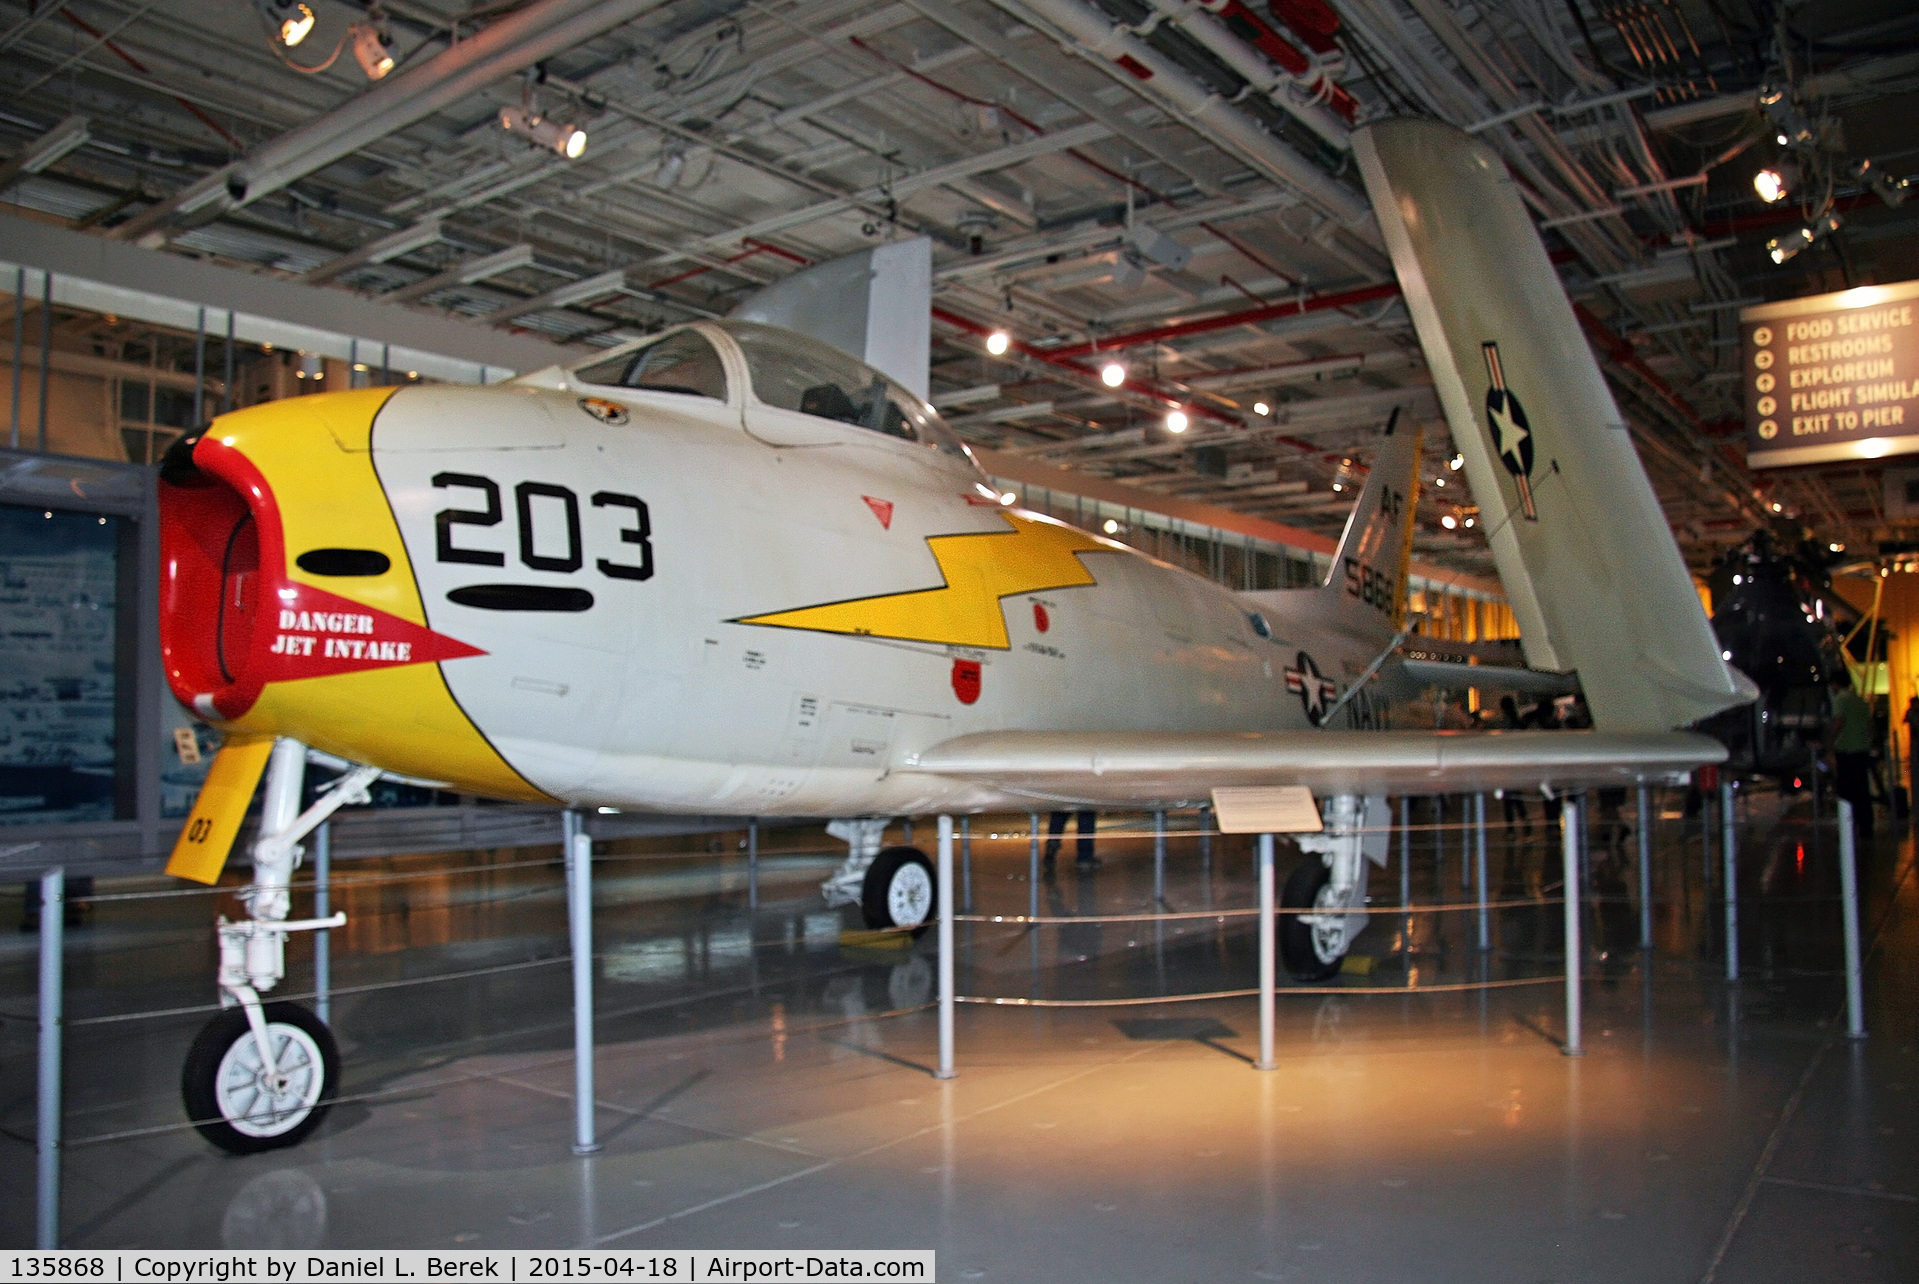 135868, North American F-1C Fury C/N 194-95, This Fury has received new markings, on display at the refurbished U.S.S. Intrepid Air-Sea-Space Museum.